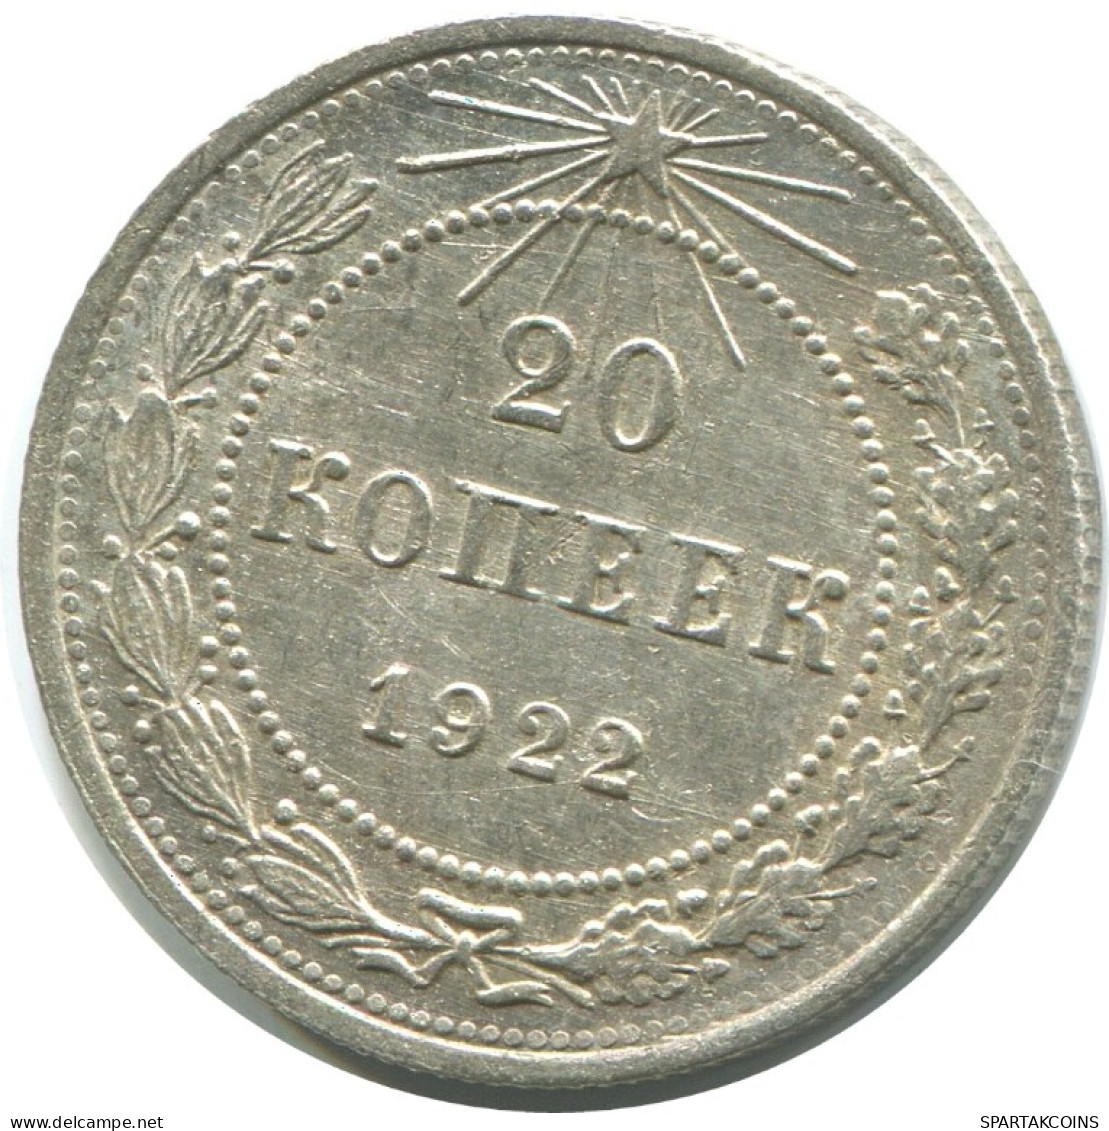 20 KOPEKS 1923 RUSSIA RSFSR SILVER Coin HIGH GRADE #AF407.4.U.A - Rusia